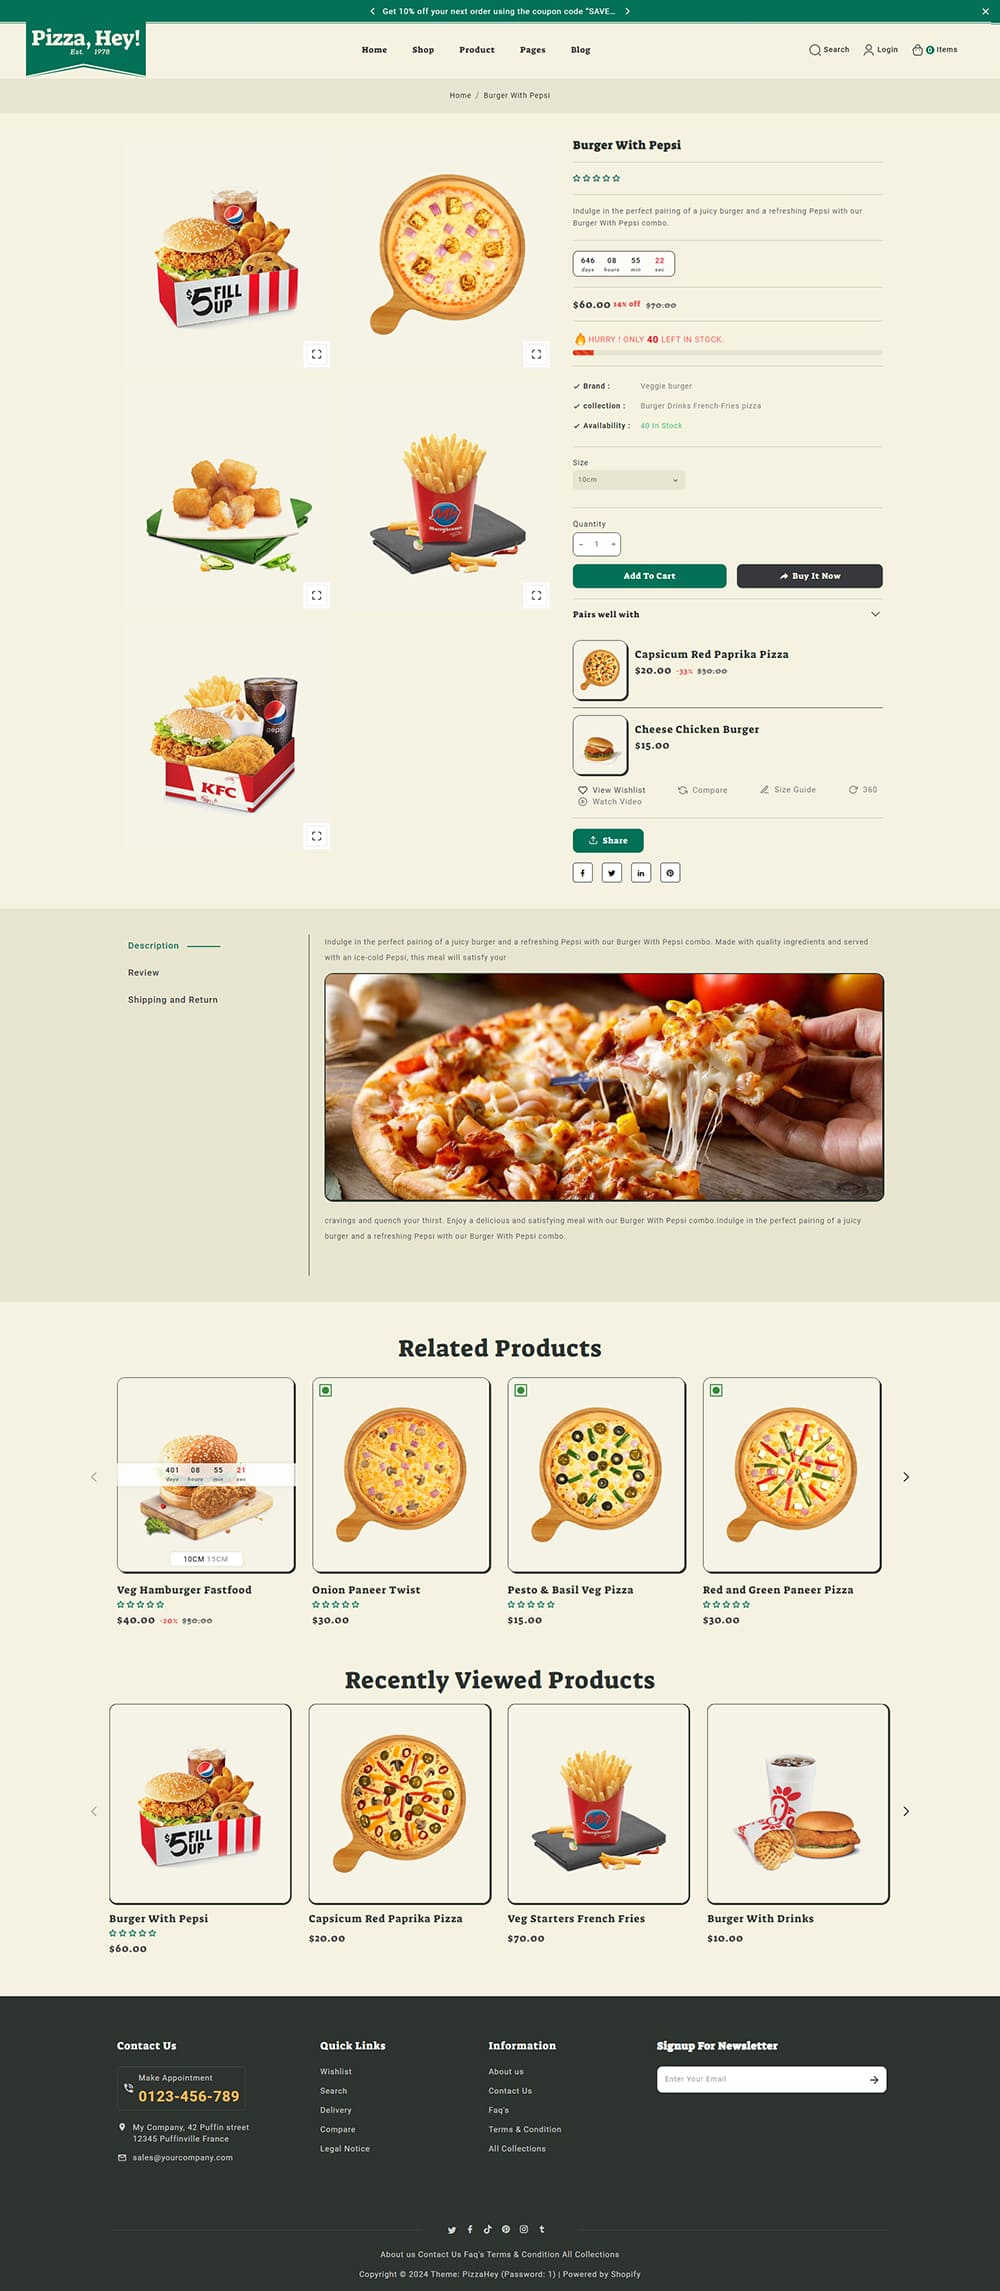 PizzaHey - Pizza, Fast Food & Restaurants - Shopify Theme